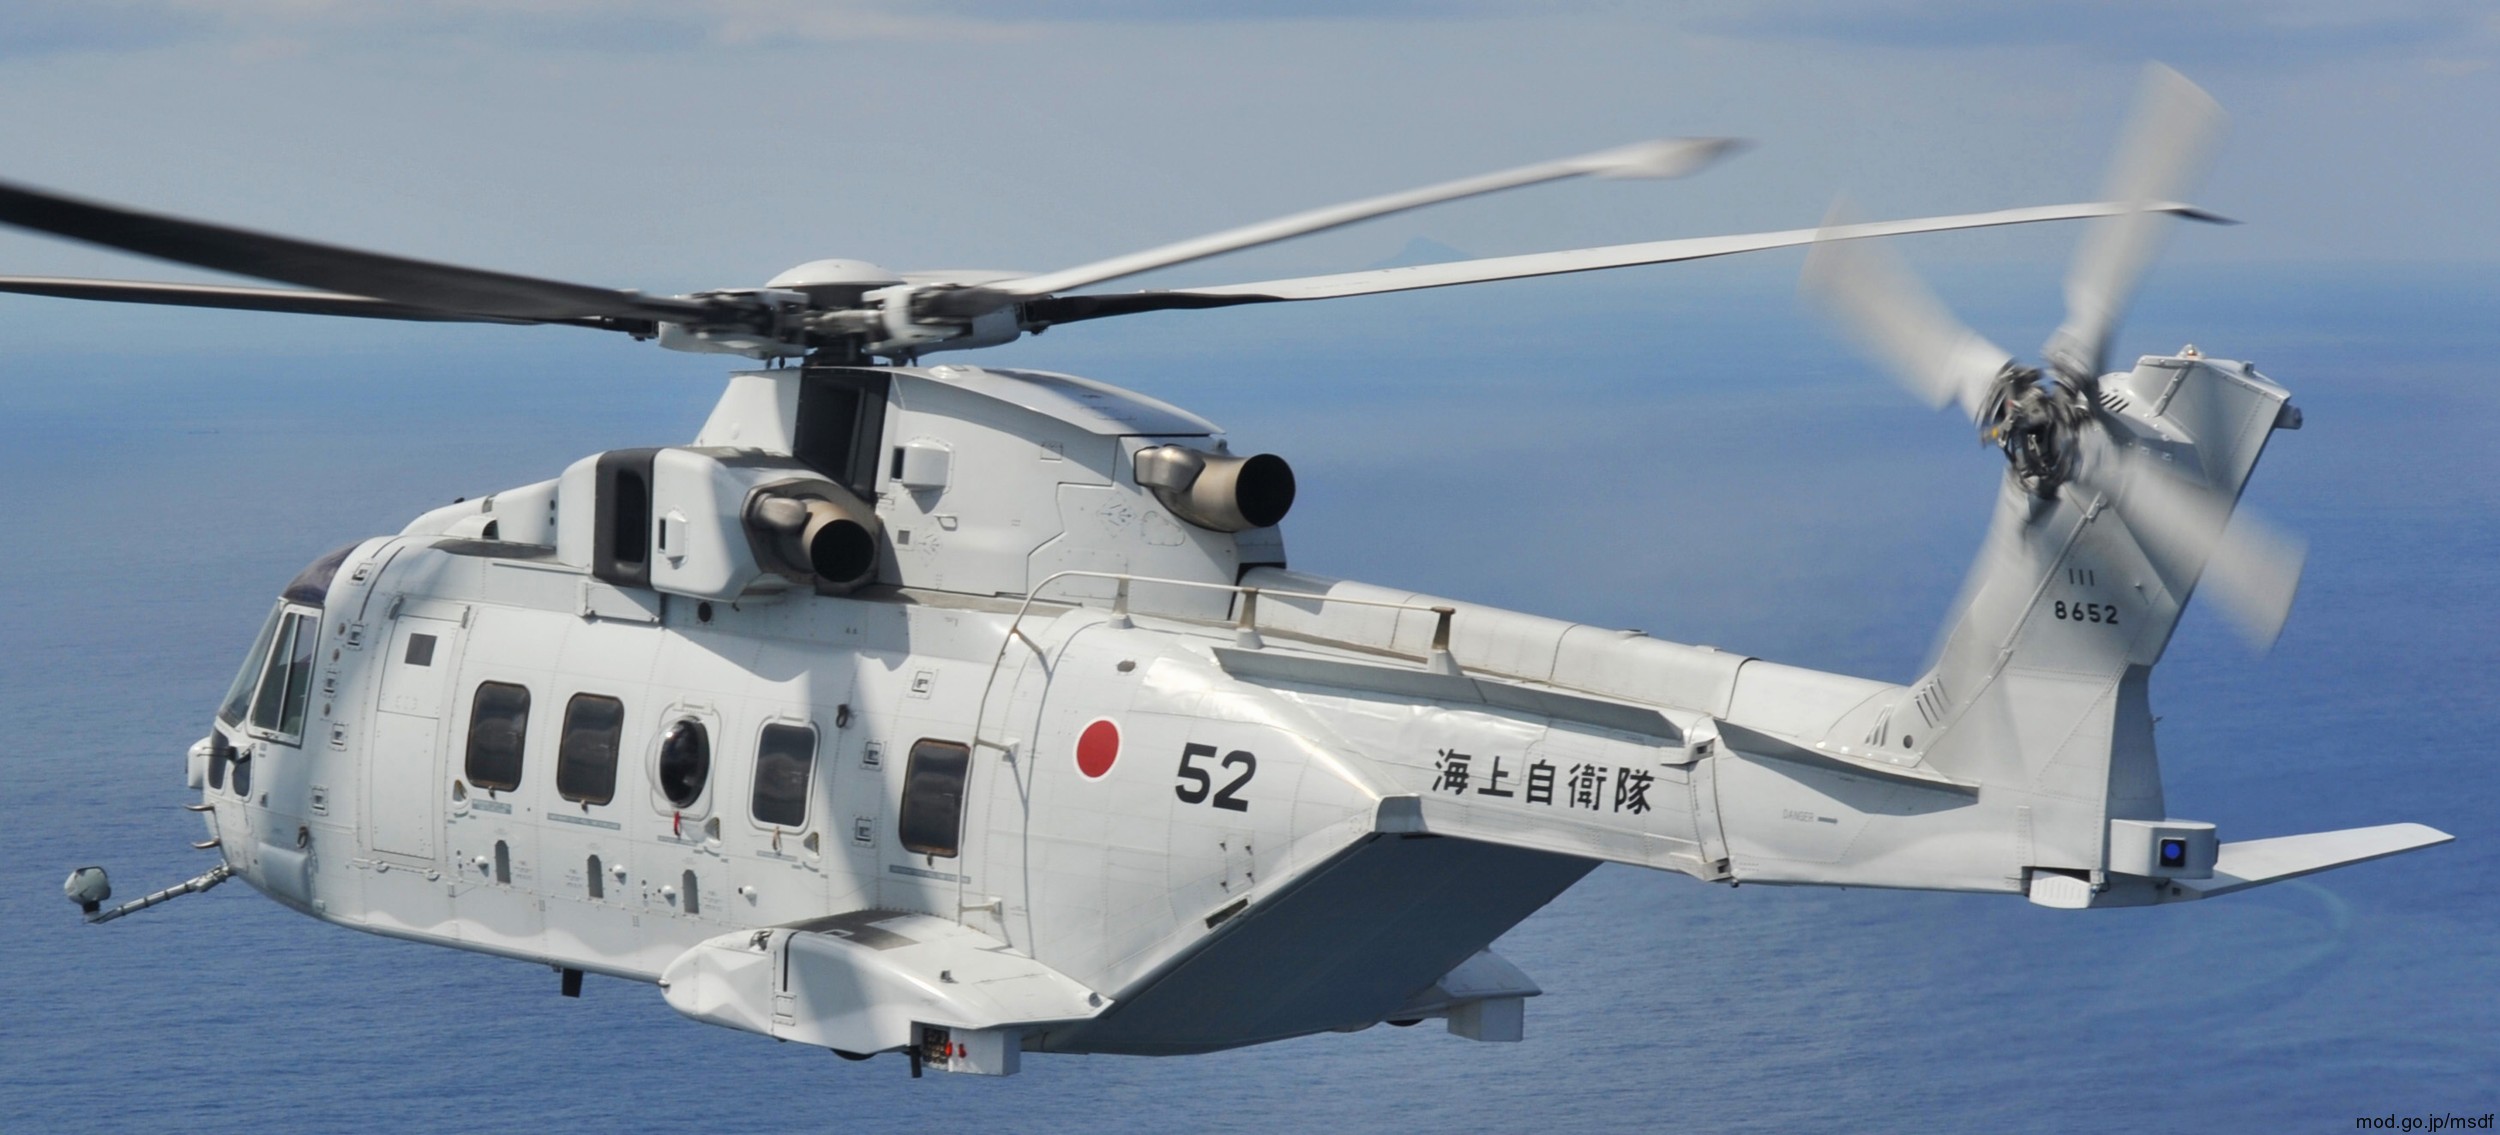 kawasaki mch-101 helicopter airborne mine countermeasures amcm japan maritime self defense force jmsdf merlin 8652 02